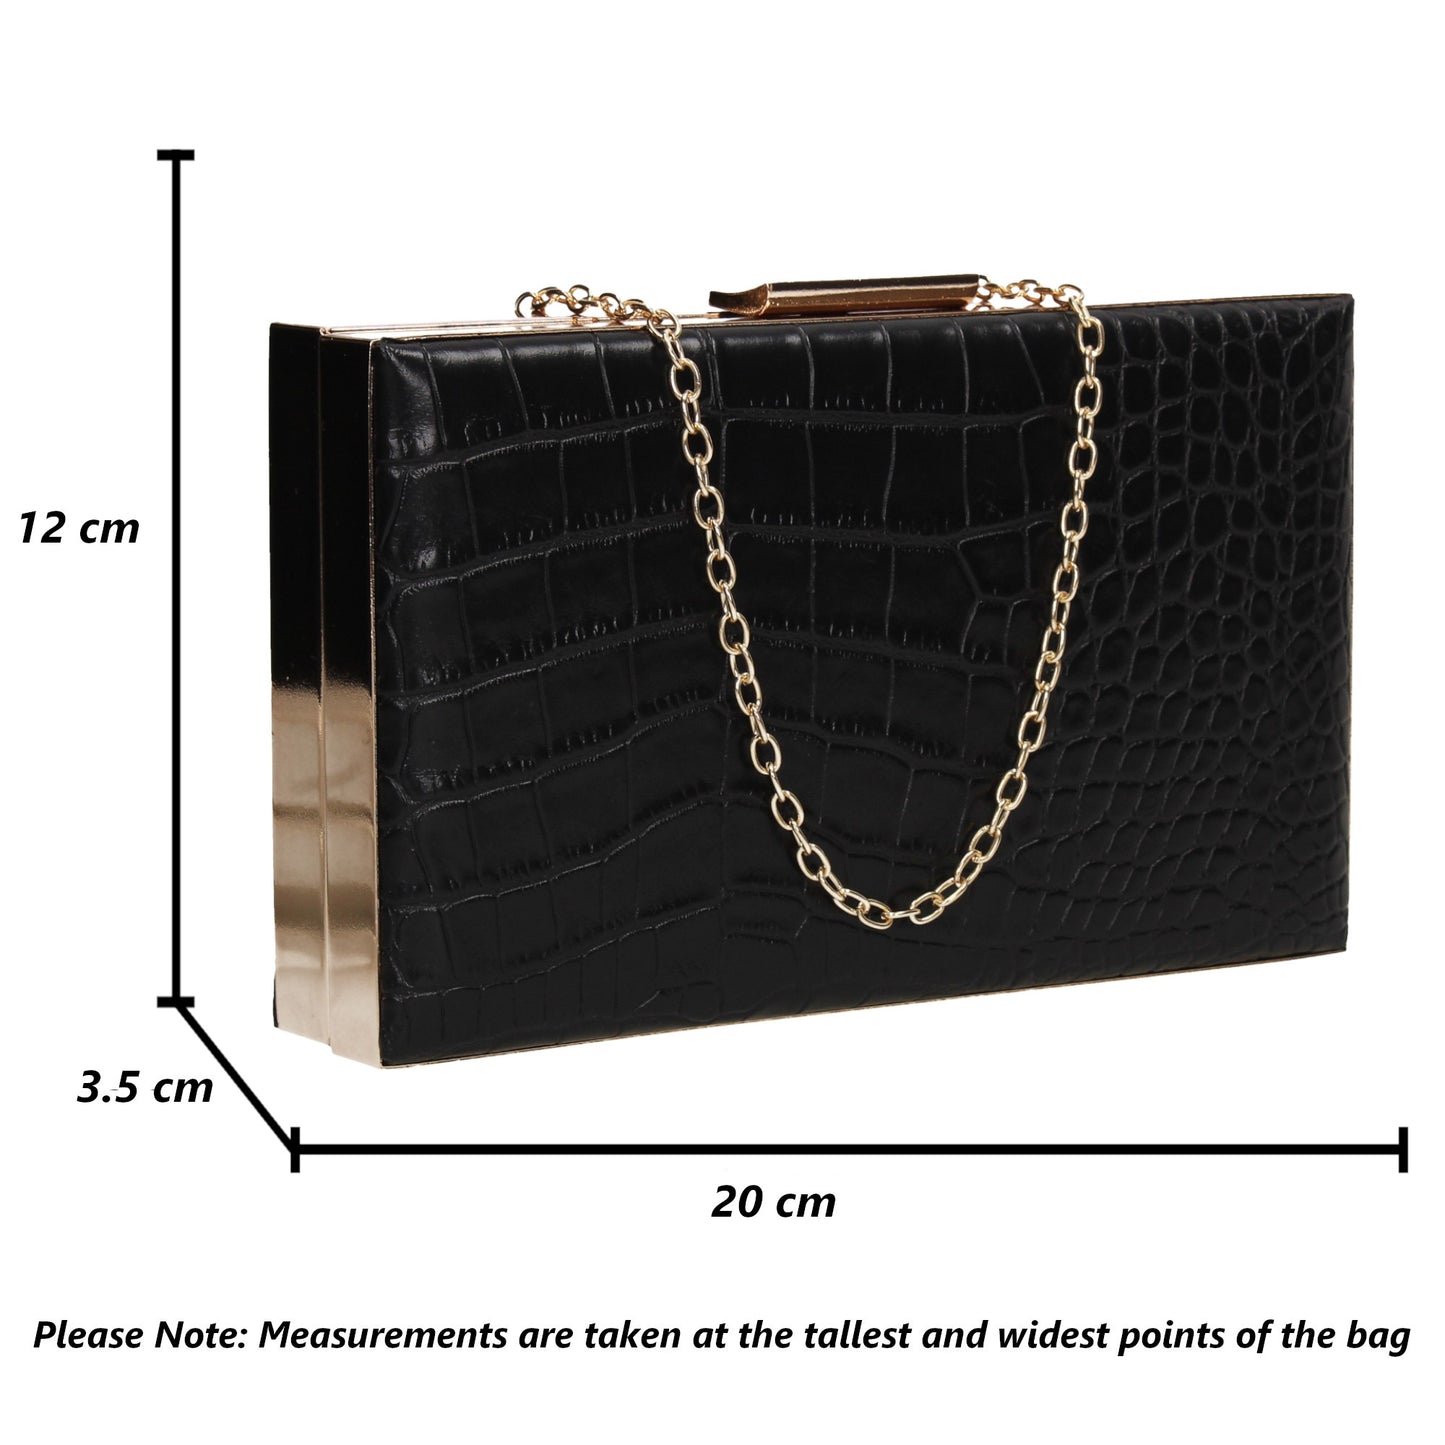 Amelia Box Shape Croc Effect Clutch Bag Black